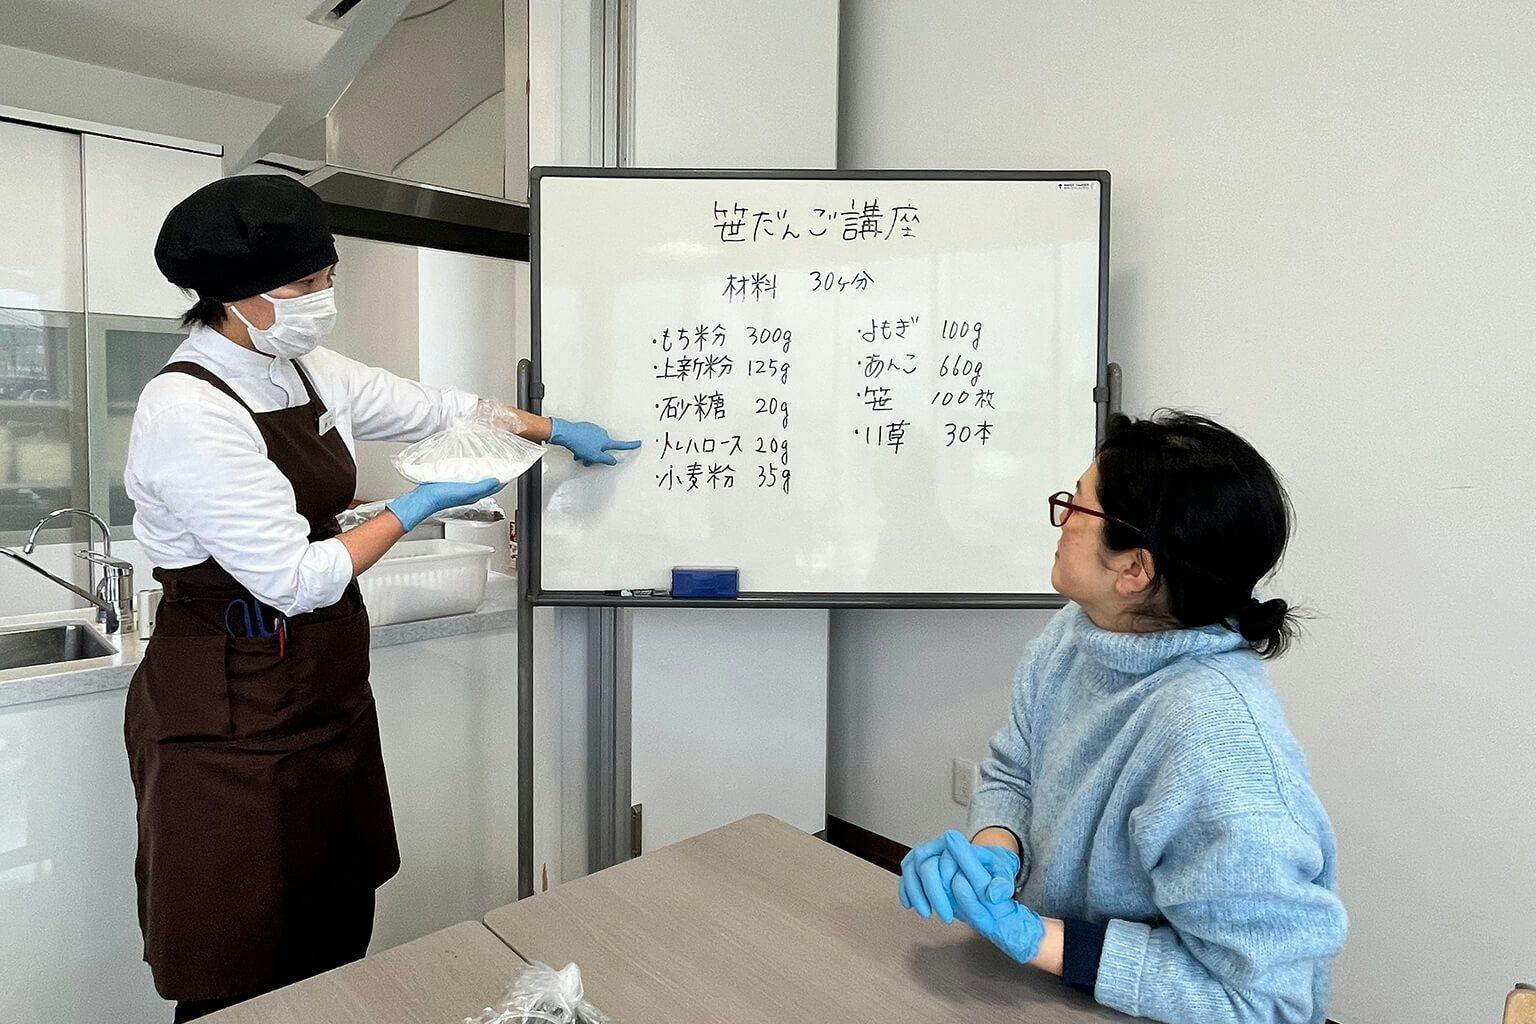 Sasadango workshop instructor, Uchiyama-san, gives an overview of sasadango ingredients.